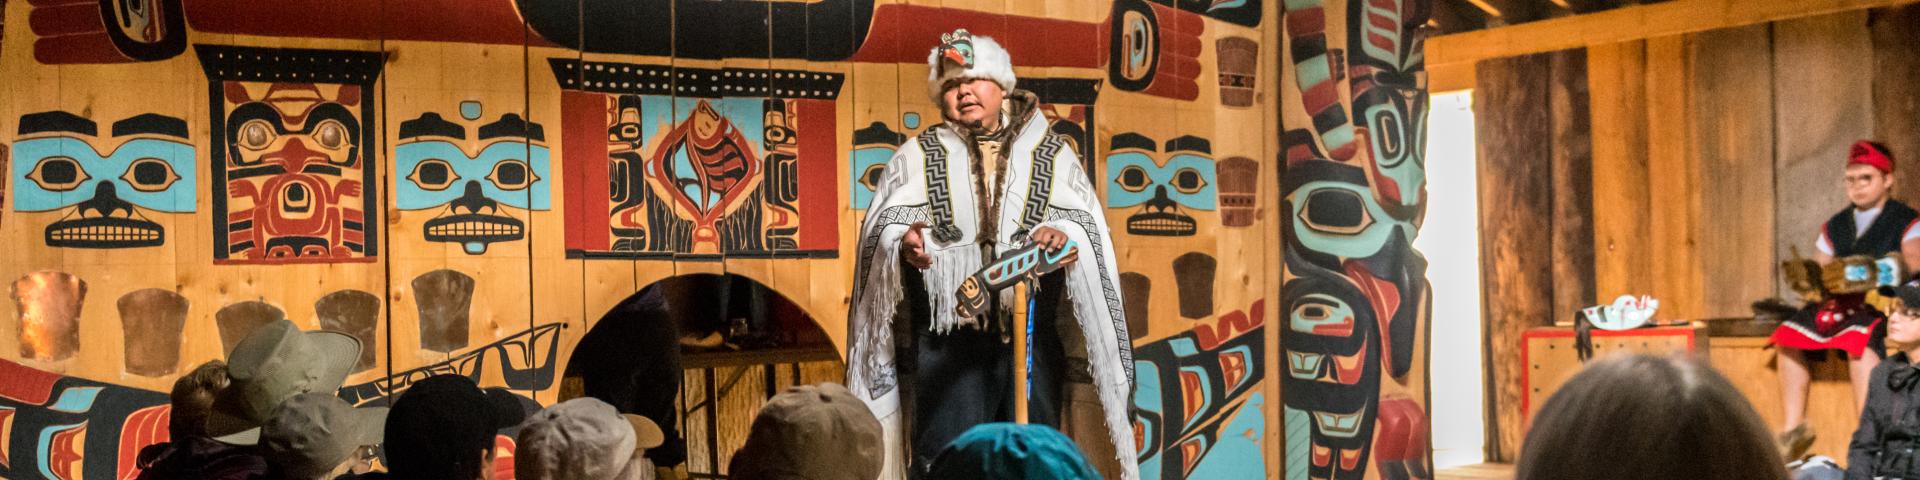 Traditional Indigenous storytelling